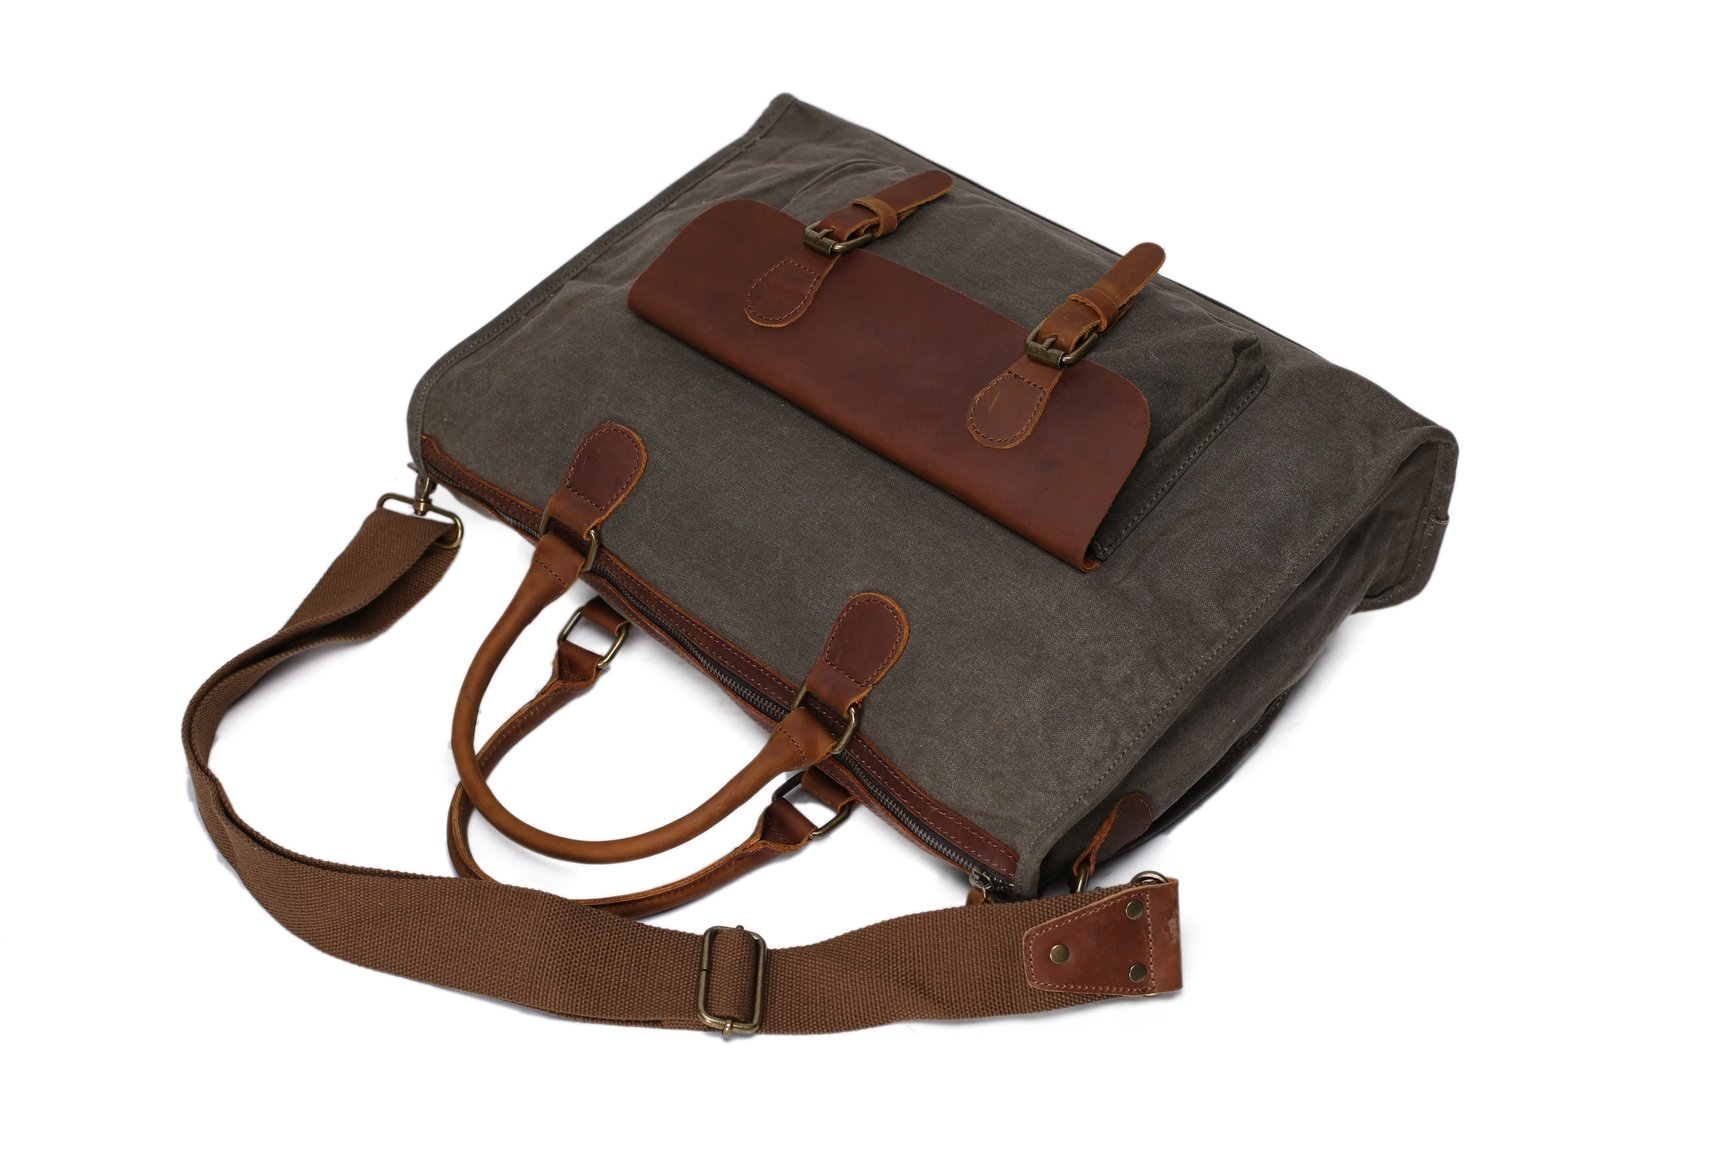 MoshiLeatherBag - Handmade Leather Bag Manufacturer — Waxed Canvas Leather Messenger Bag, Laptop ...